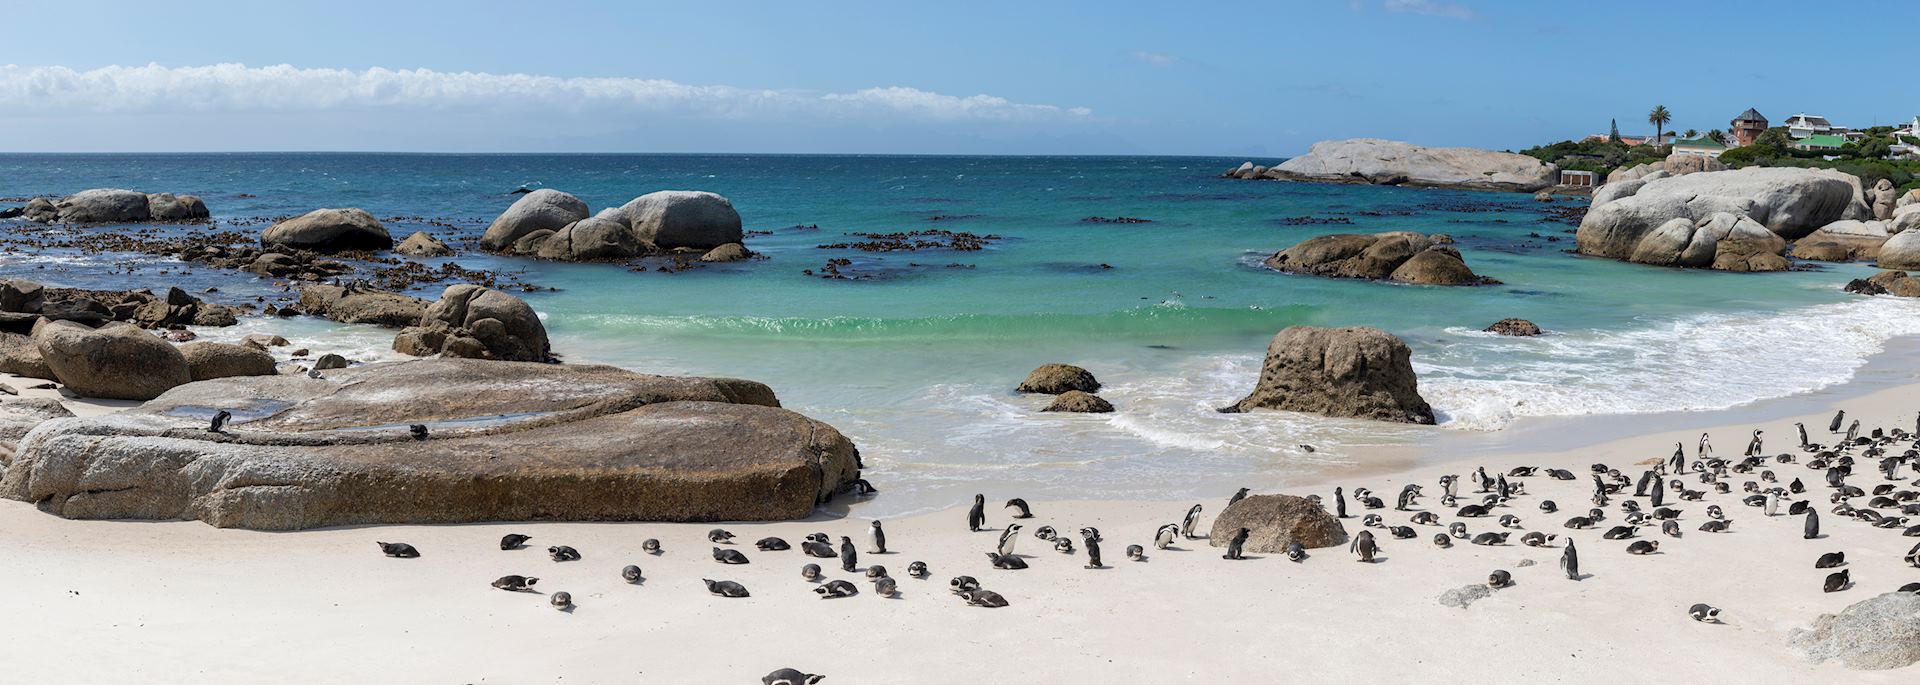 Penguins on Boulder Beach near Cape Town